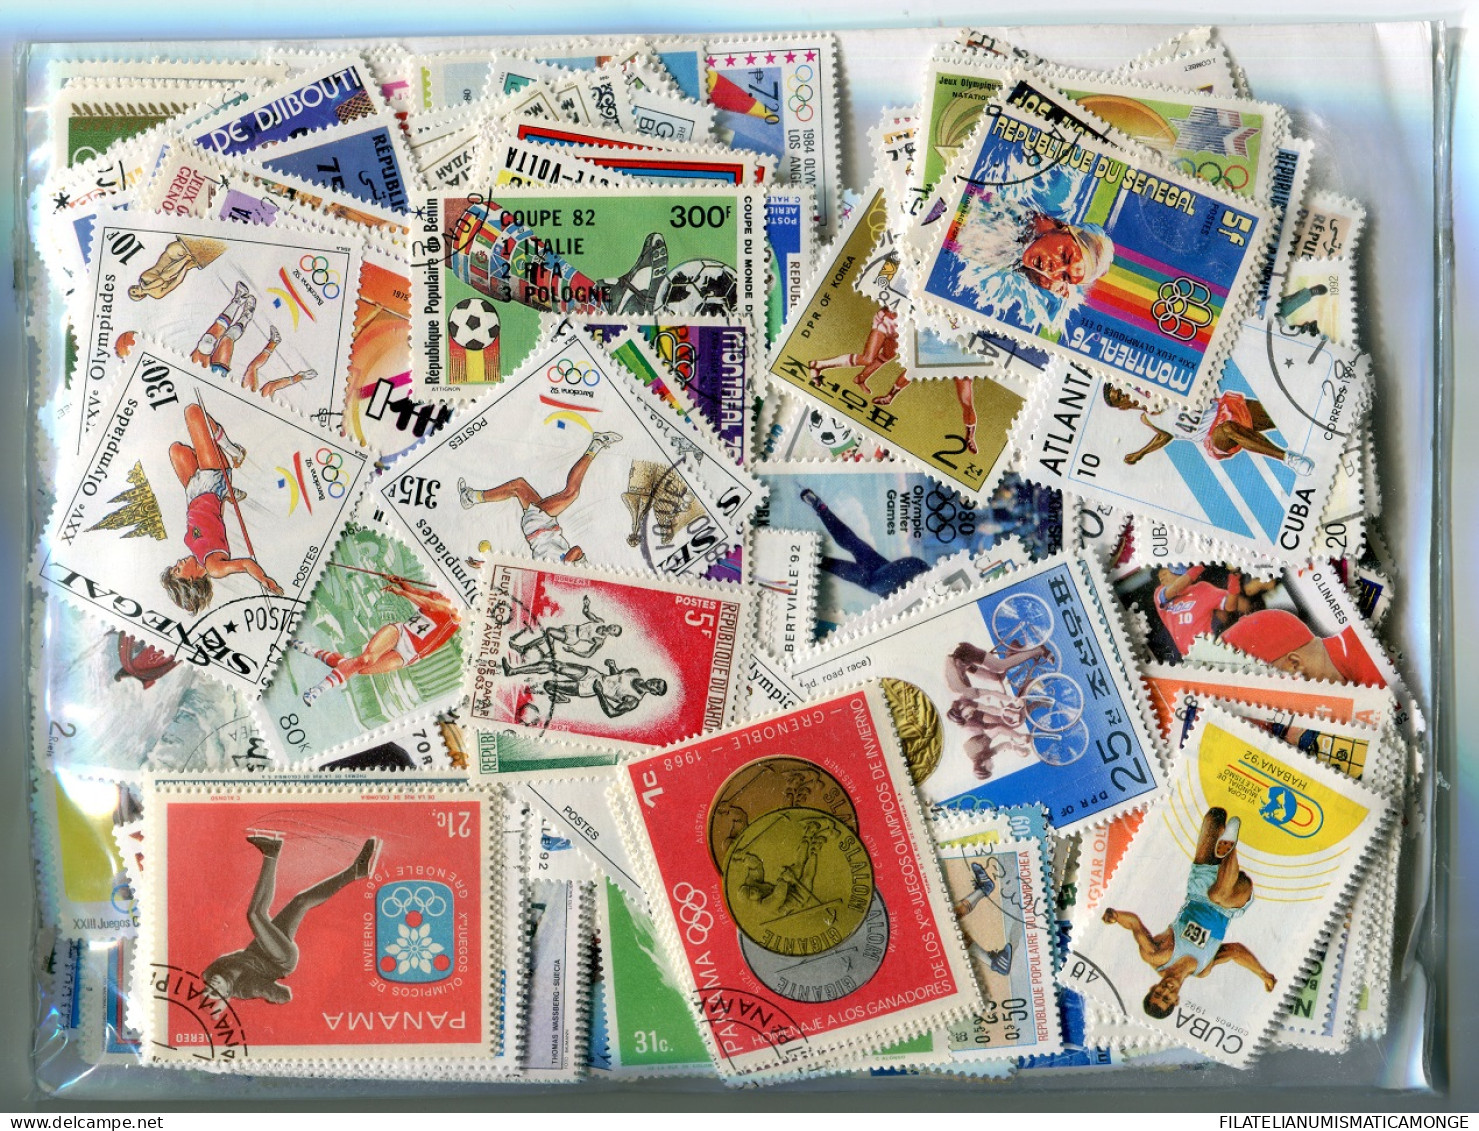  Offer - Lot Stamps - Paqueteria  Temáticas Varias 2000 Sellos Diferentes Depor - Kilowaar (min. 1000 Zegels)